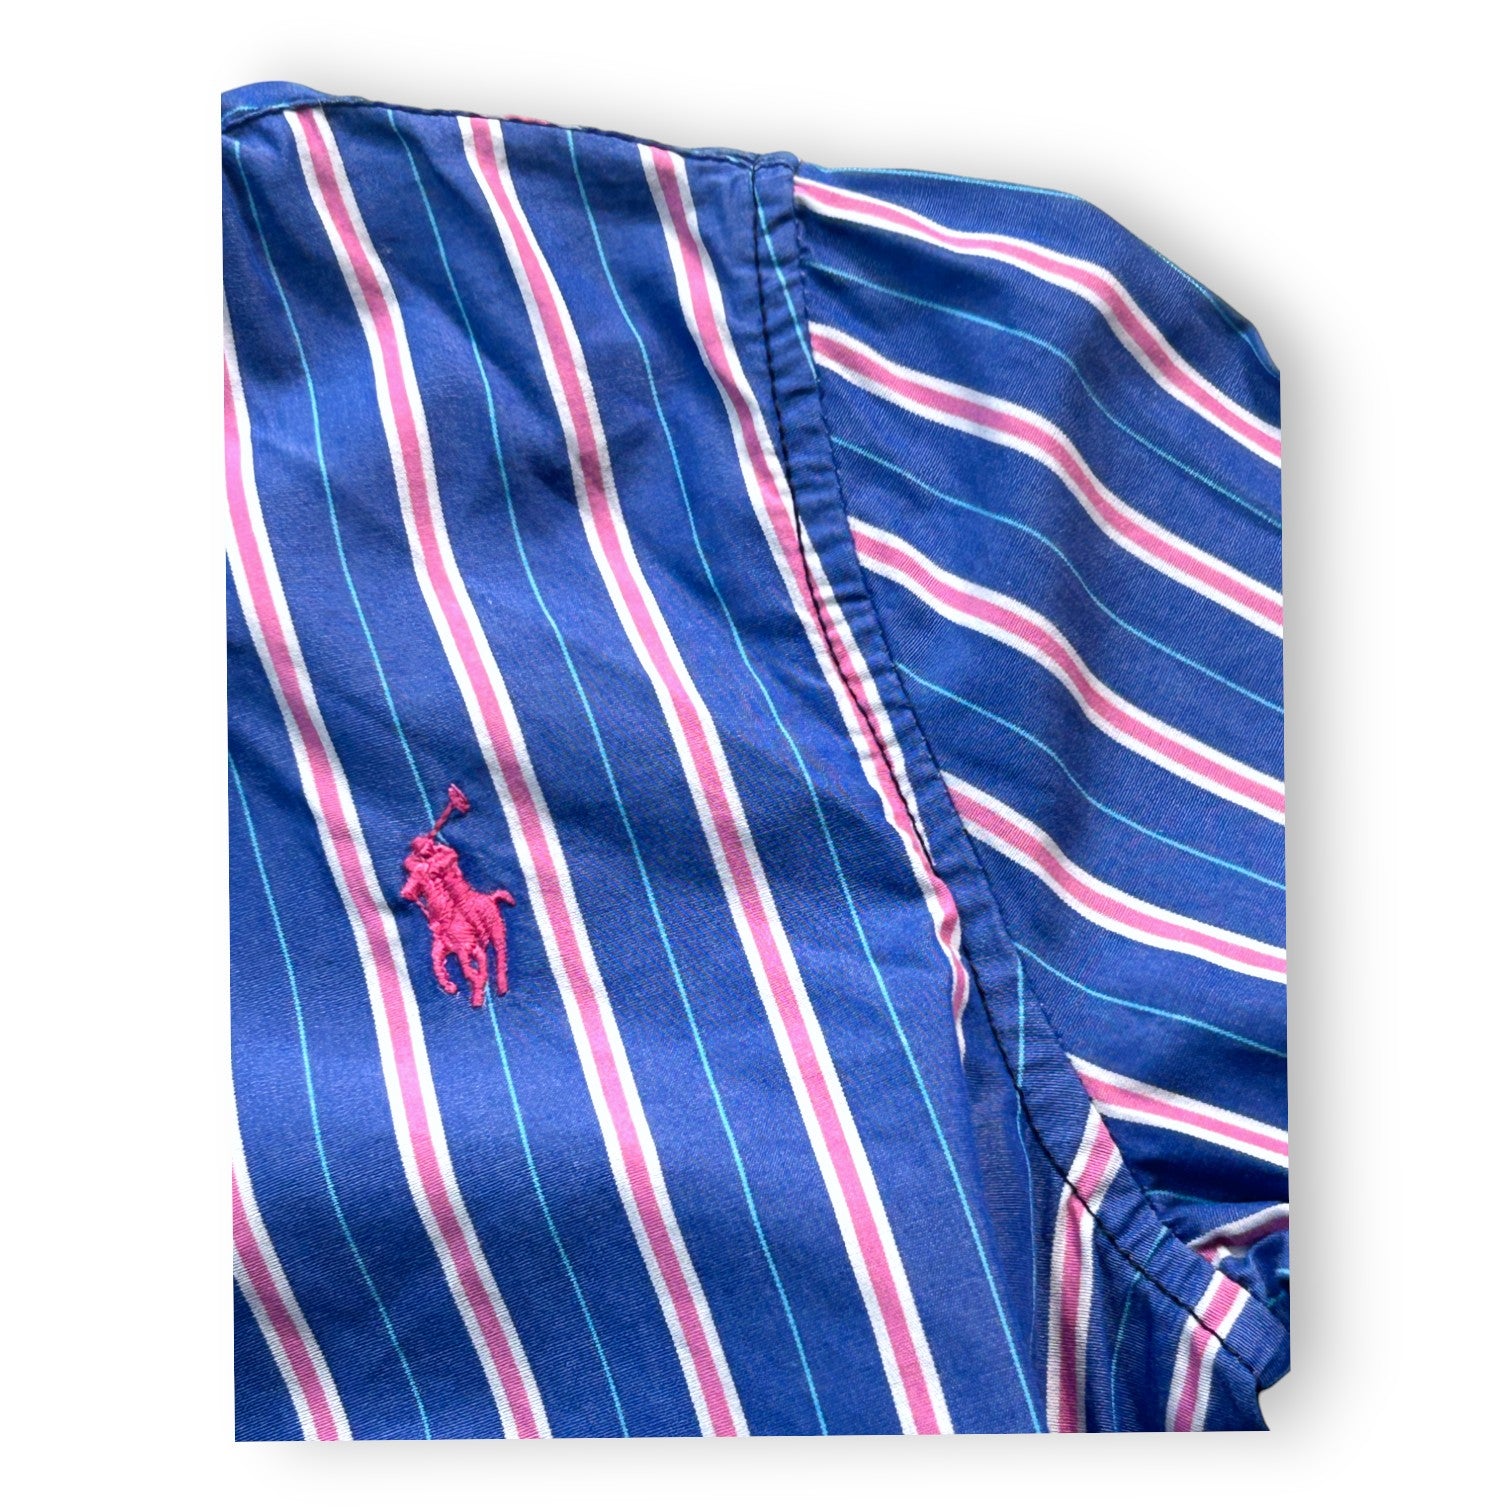 RALPH LAUREN - Robe chemise bleue à rayures roses - 7 ans